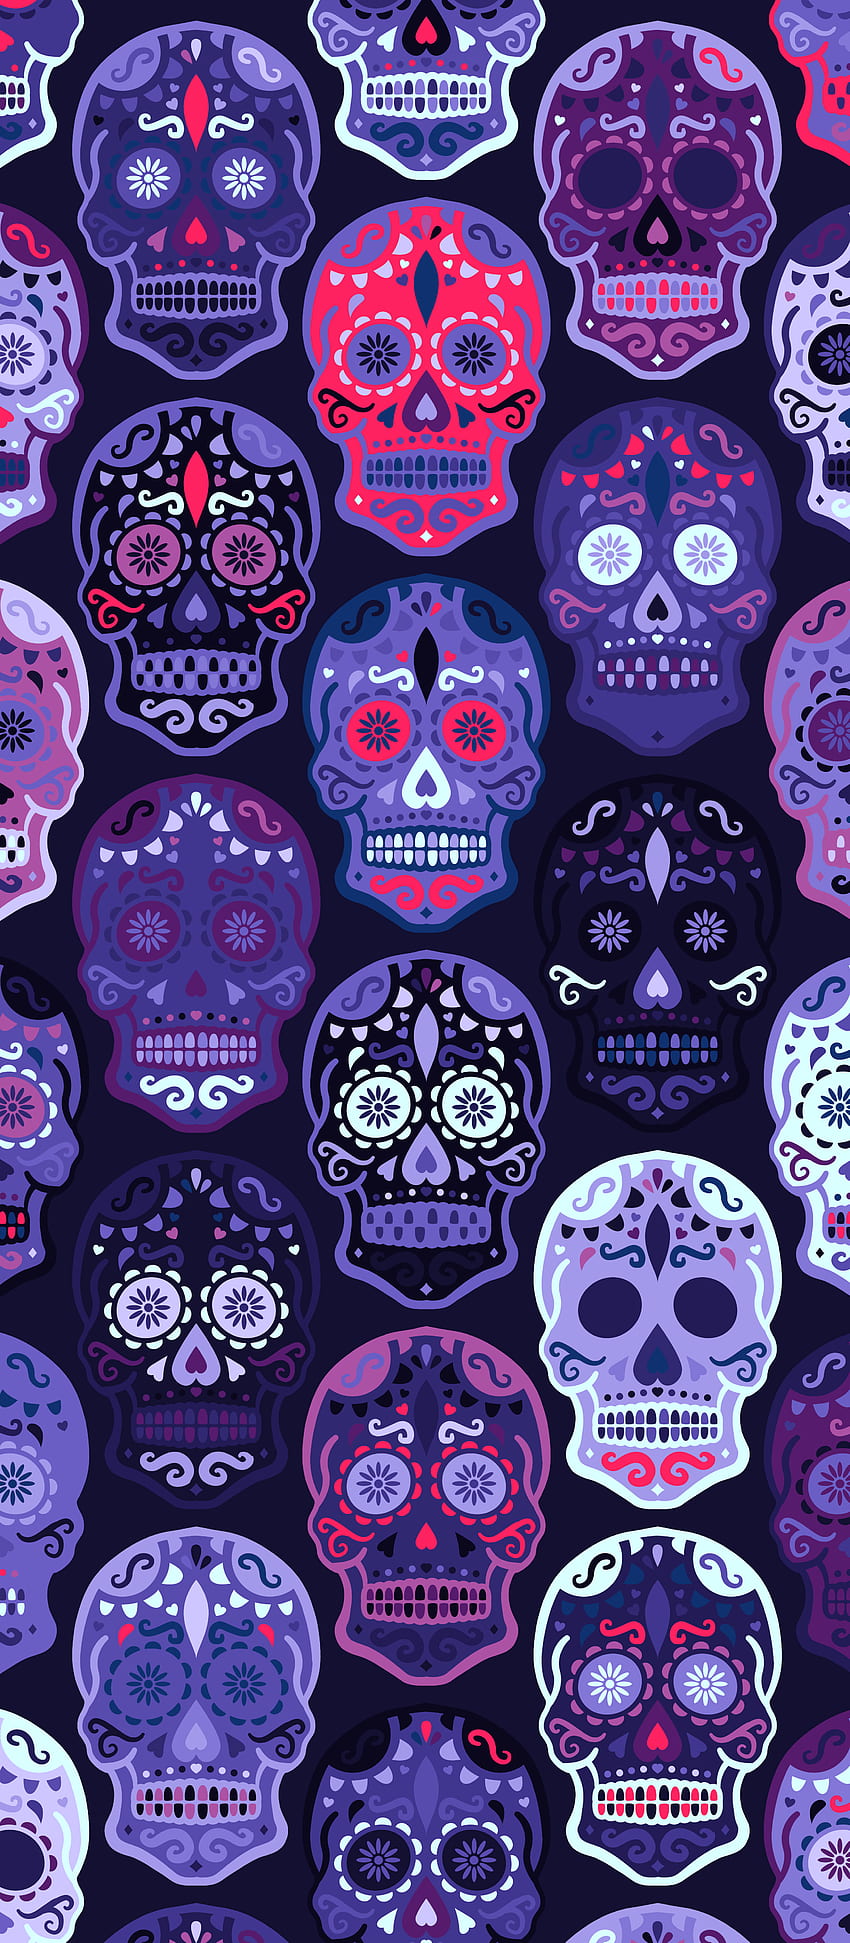 Sugar Skull Wallpaper Iphone